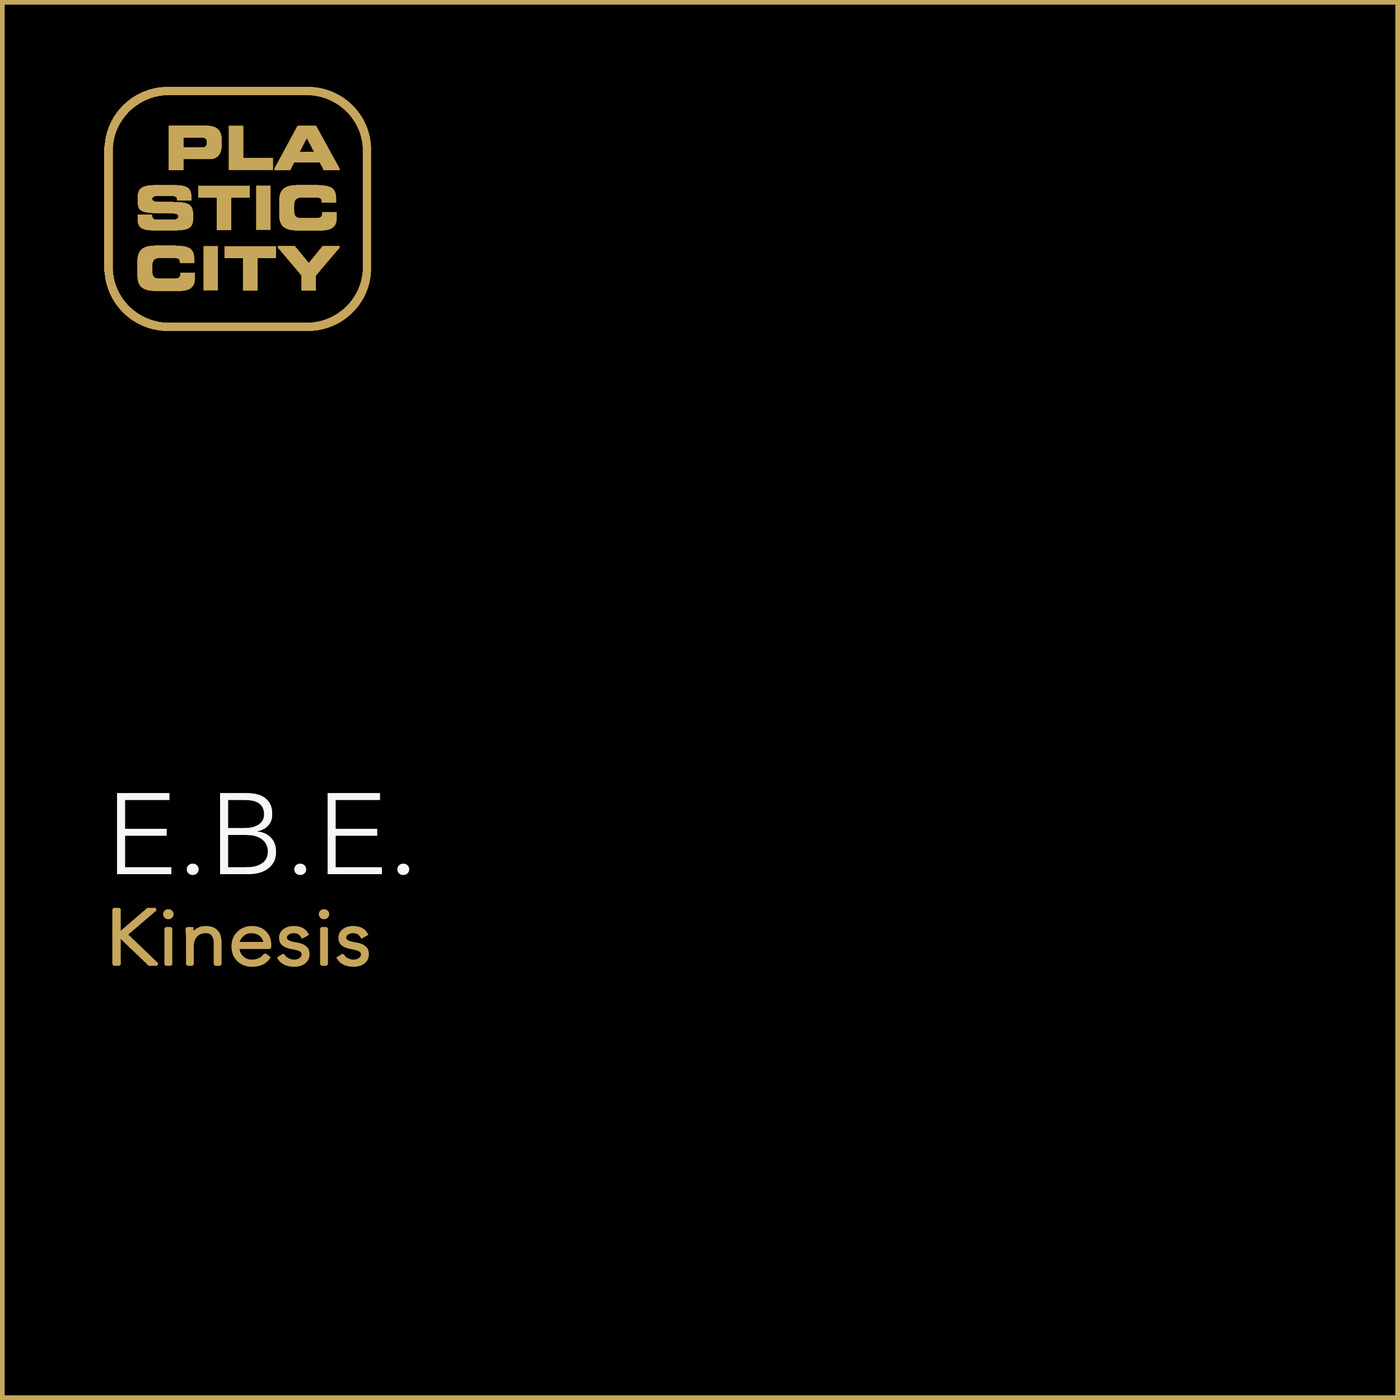 E.B.E. - Kinesis / Plastic City